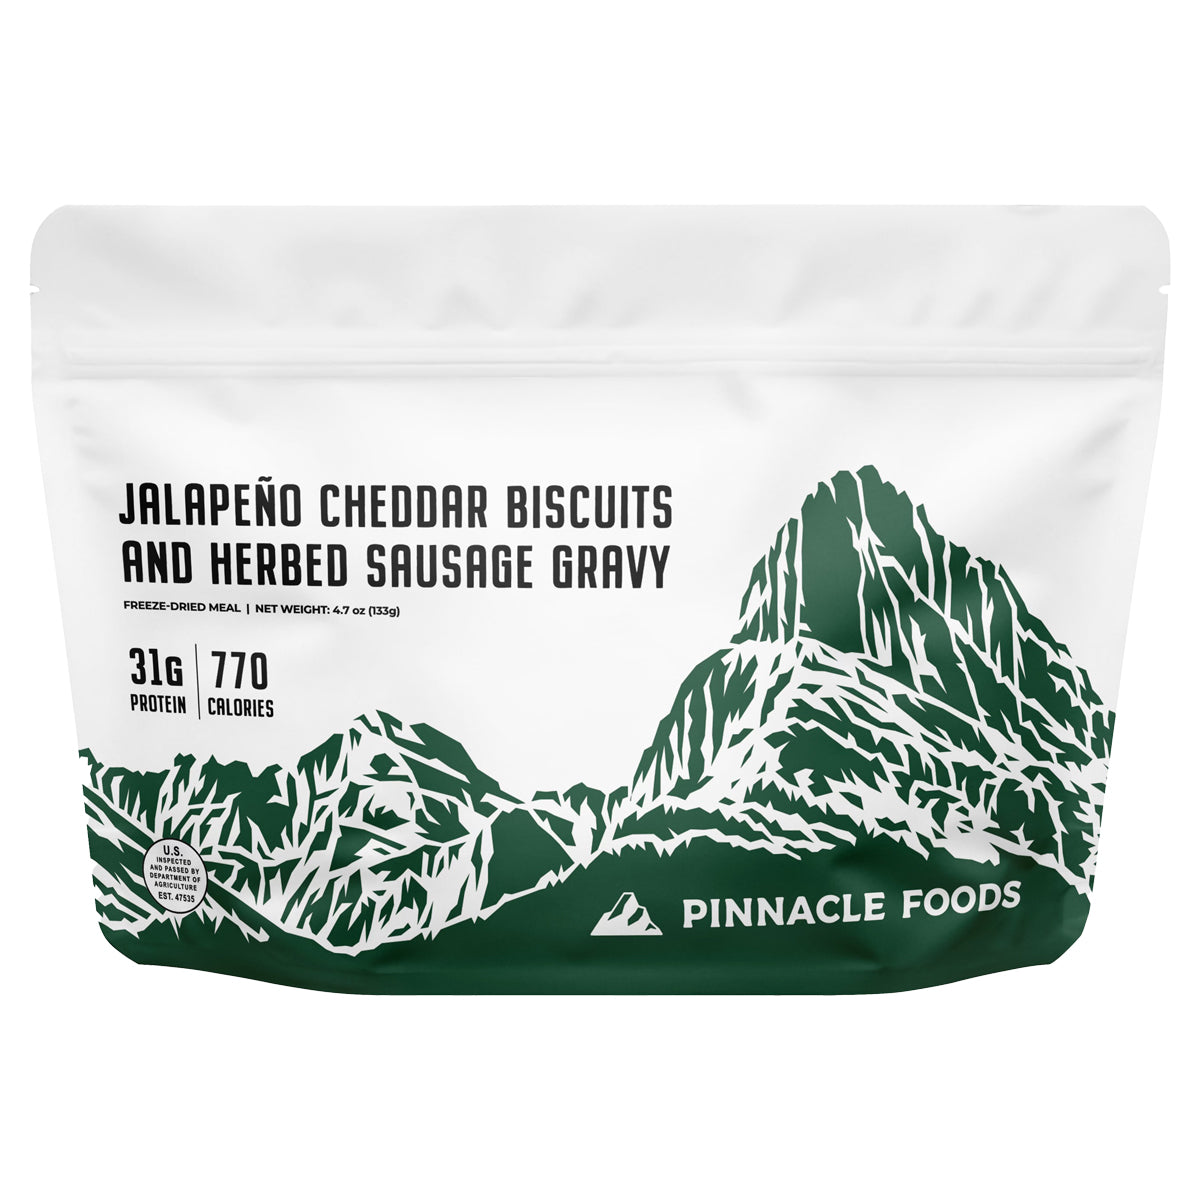 Pinnacle Foods Jalapeno Cheddar Biscuits and Herbed Sausage Gravy in  by GOHUNT | Pinnacle Foods - GOHUNT Shop